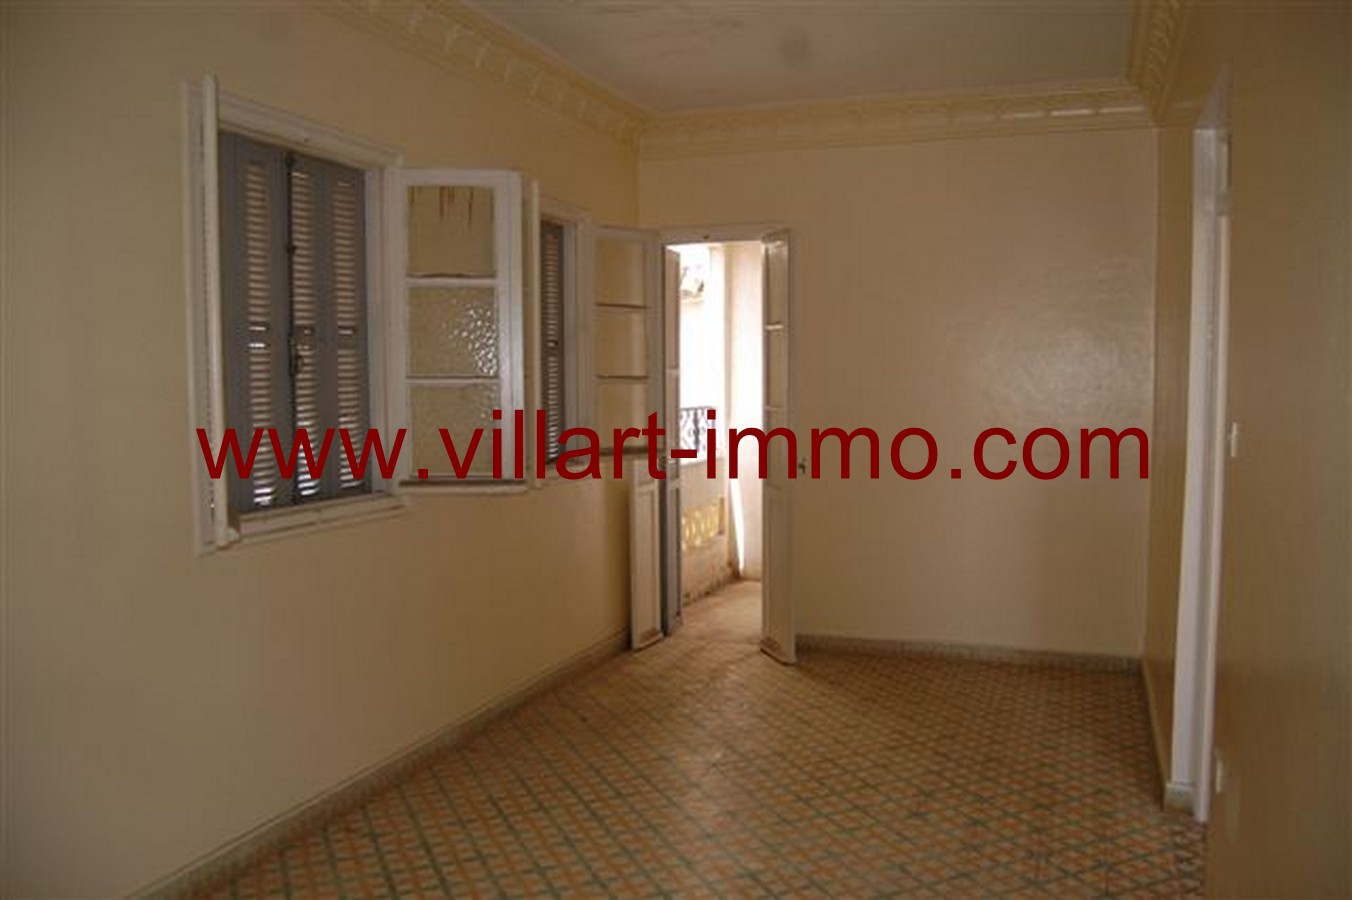 6-Vente-Appartement-Tanger-Chambre -VA532-Jirari-Villart Immo